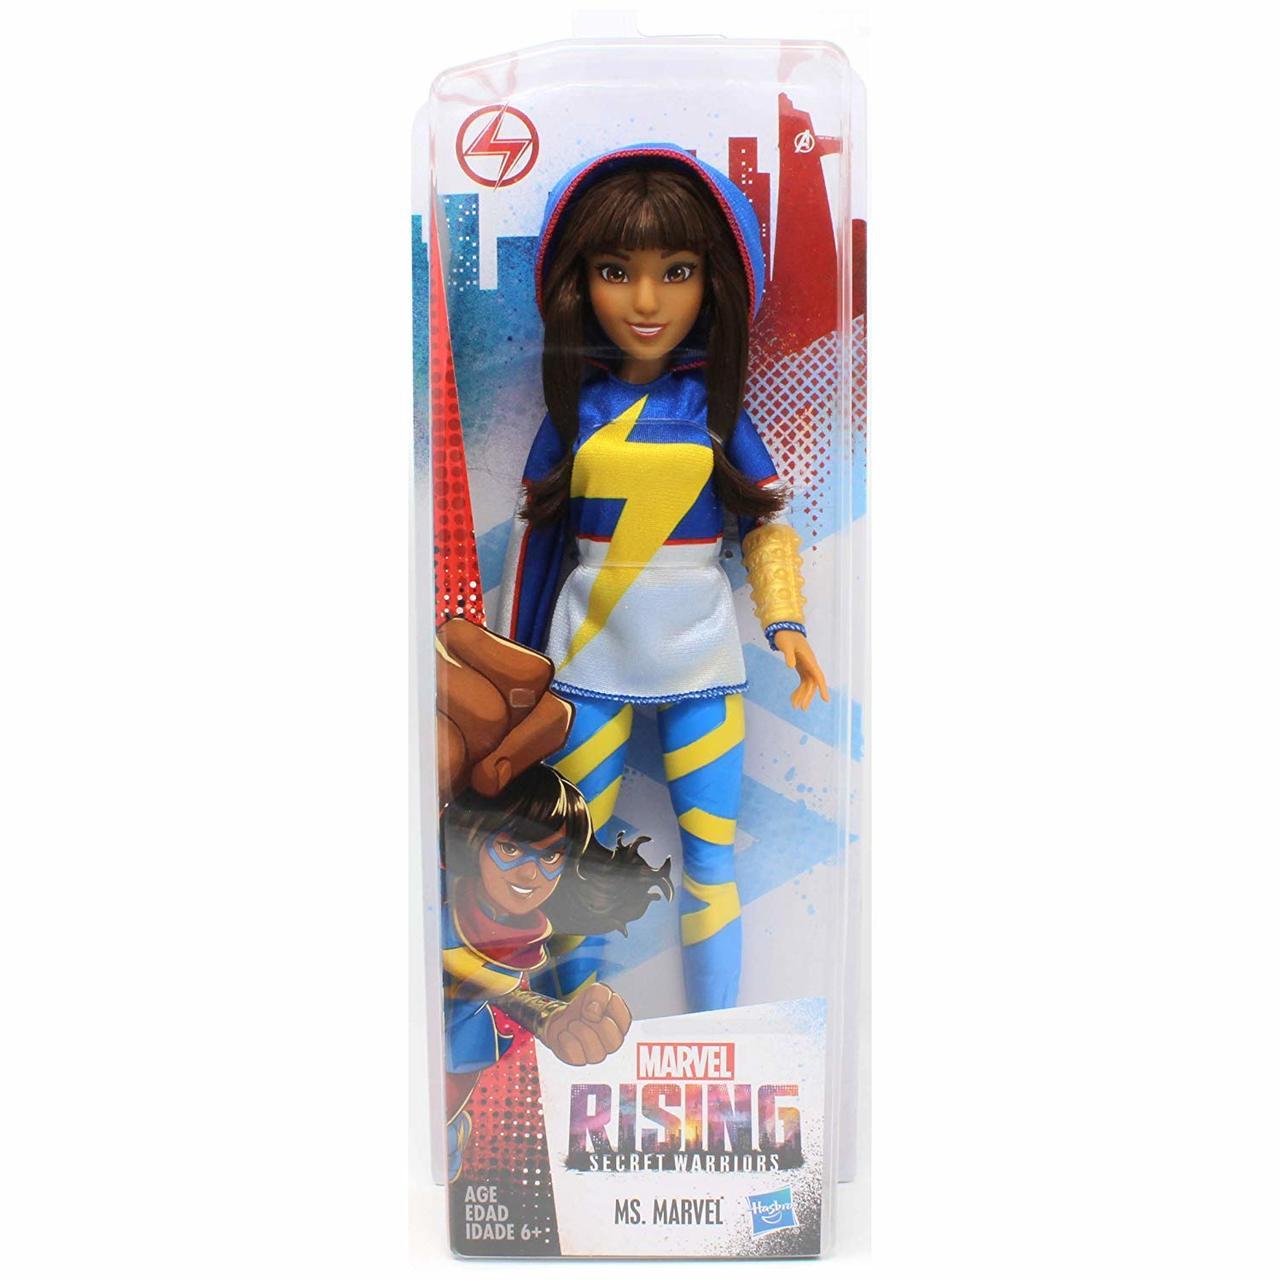 Marvel Rising Secret Warriors Ms. Marvel 11" Adventure Action Figure Doll